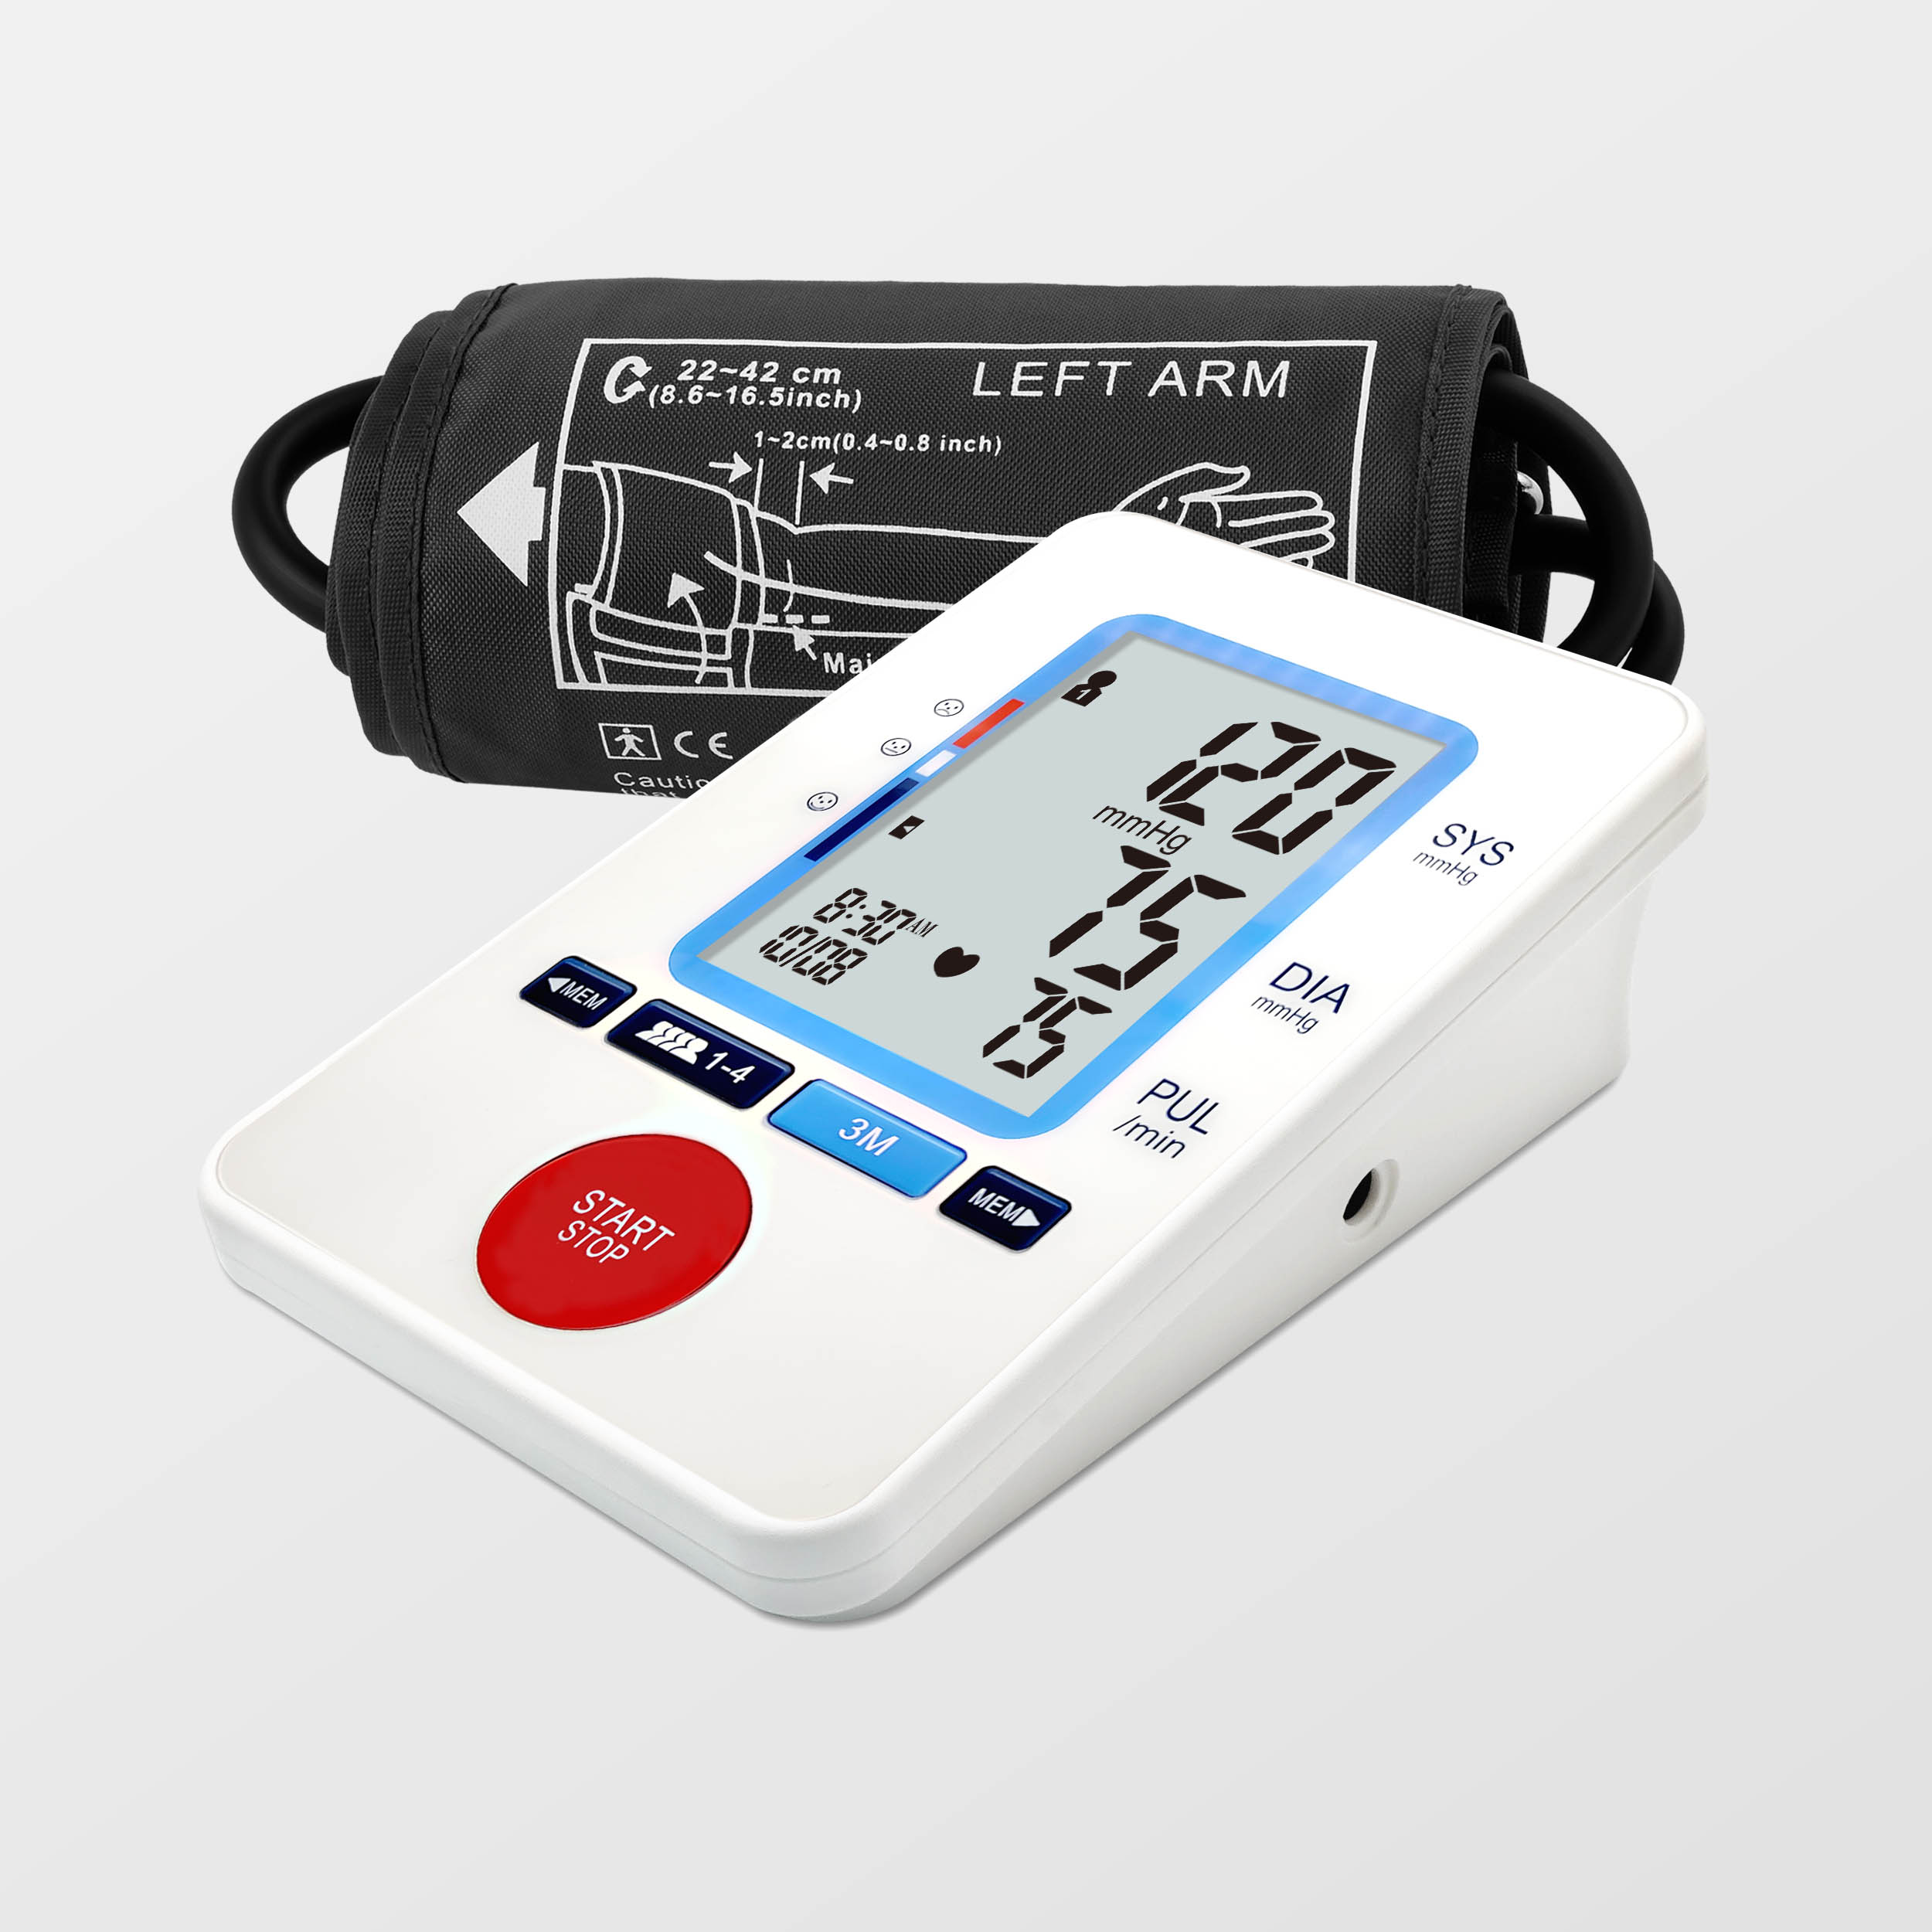 Naaprubahan ng ROHS REACH ang Upper Arm Blood Pressure Monitor Digital Tensiometro Bluetooth